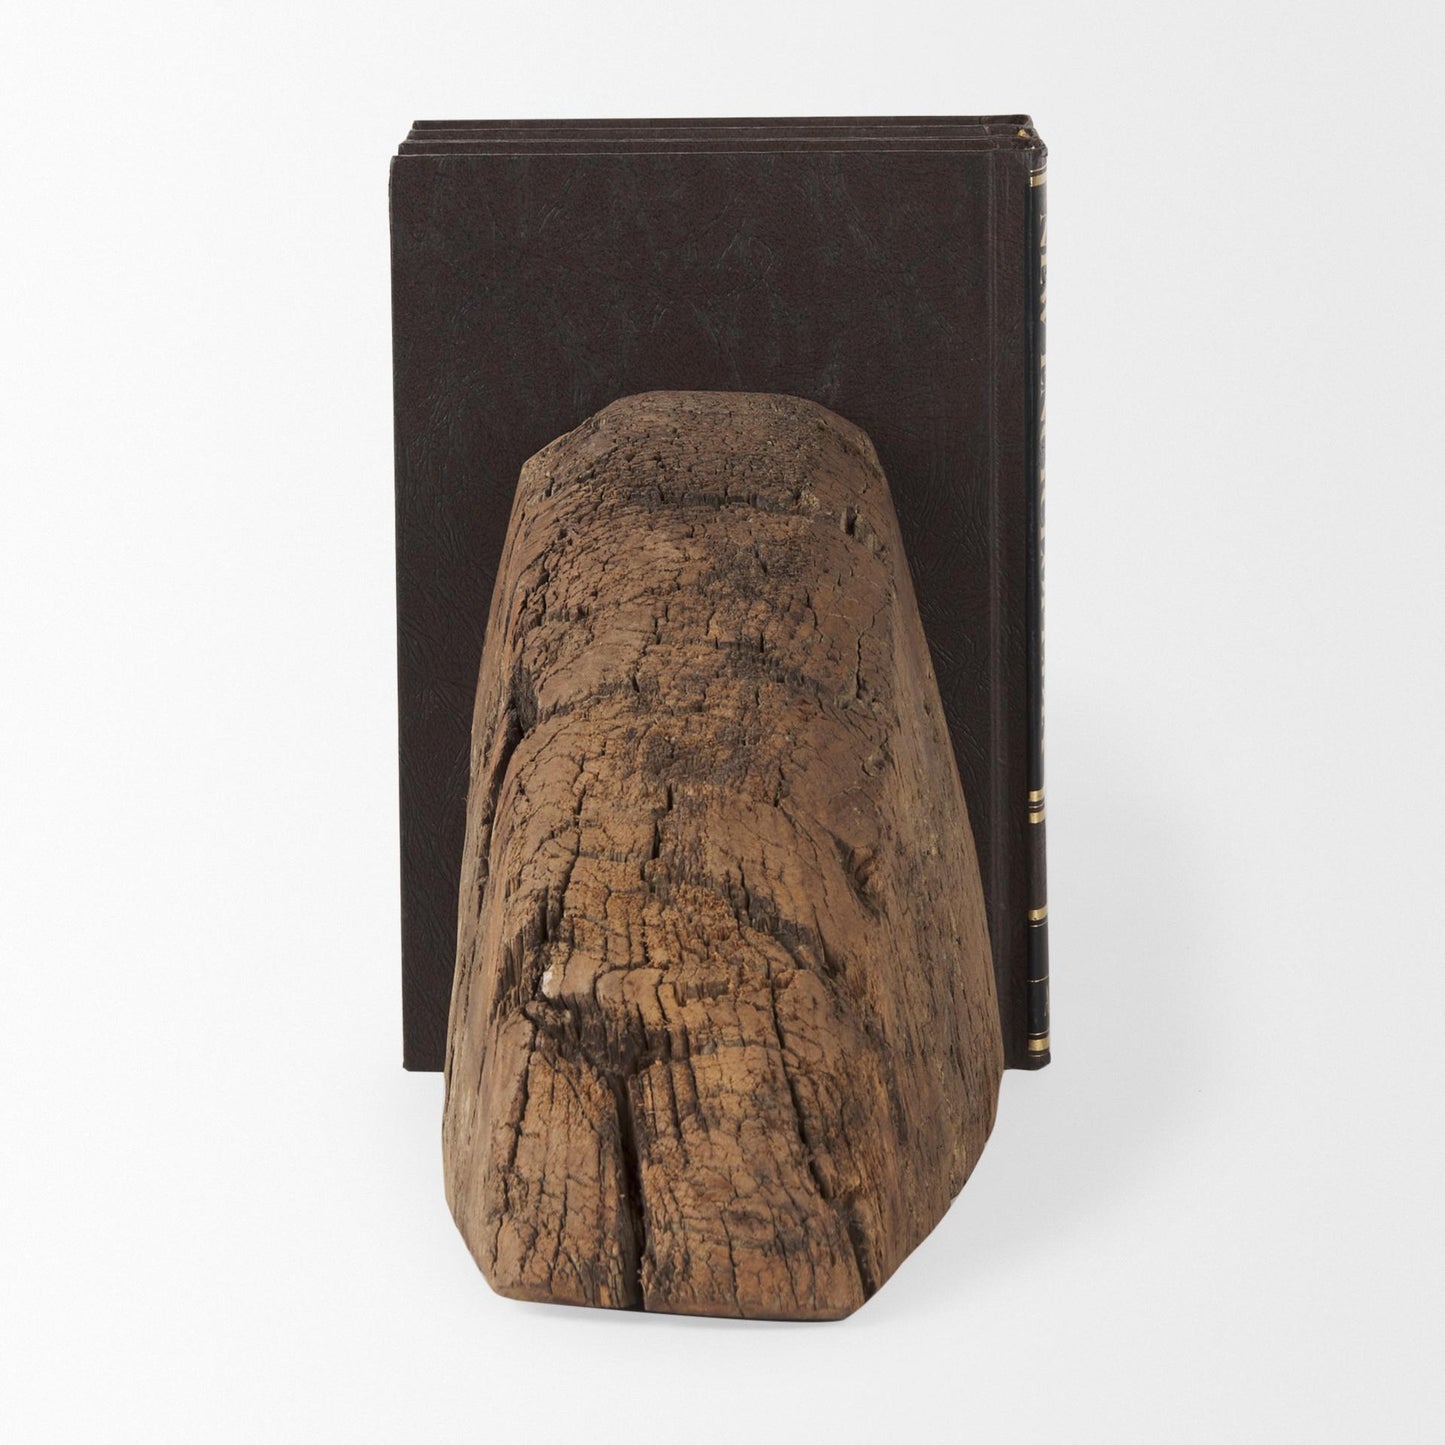 Incana Handmade Reclaimed Wooden Bookends